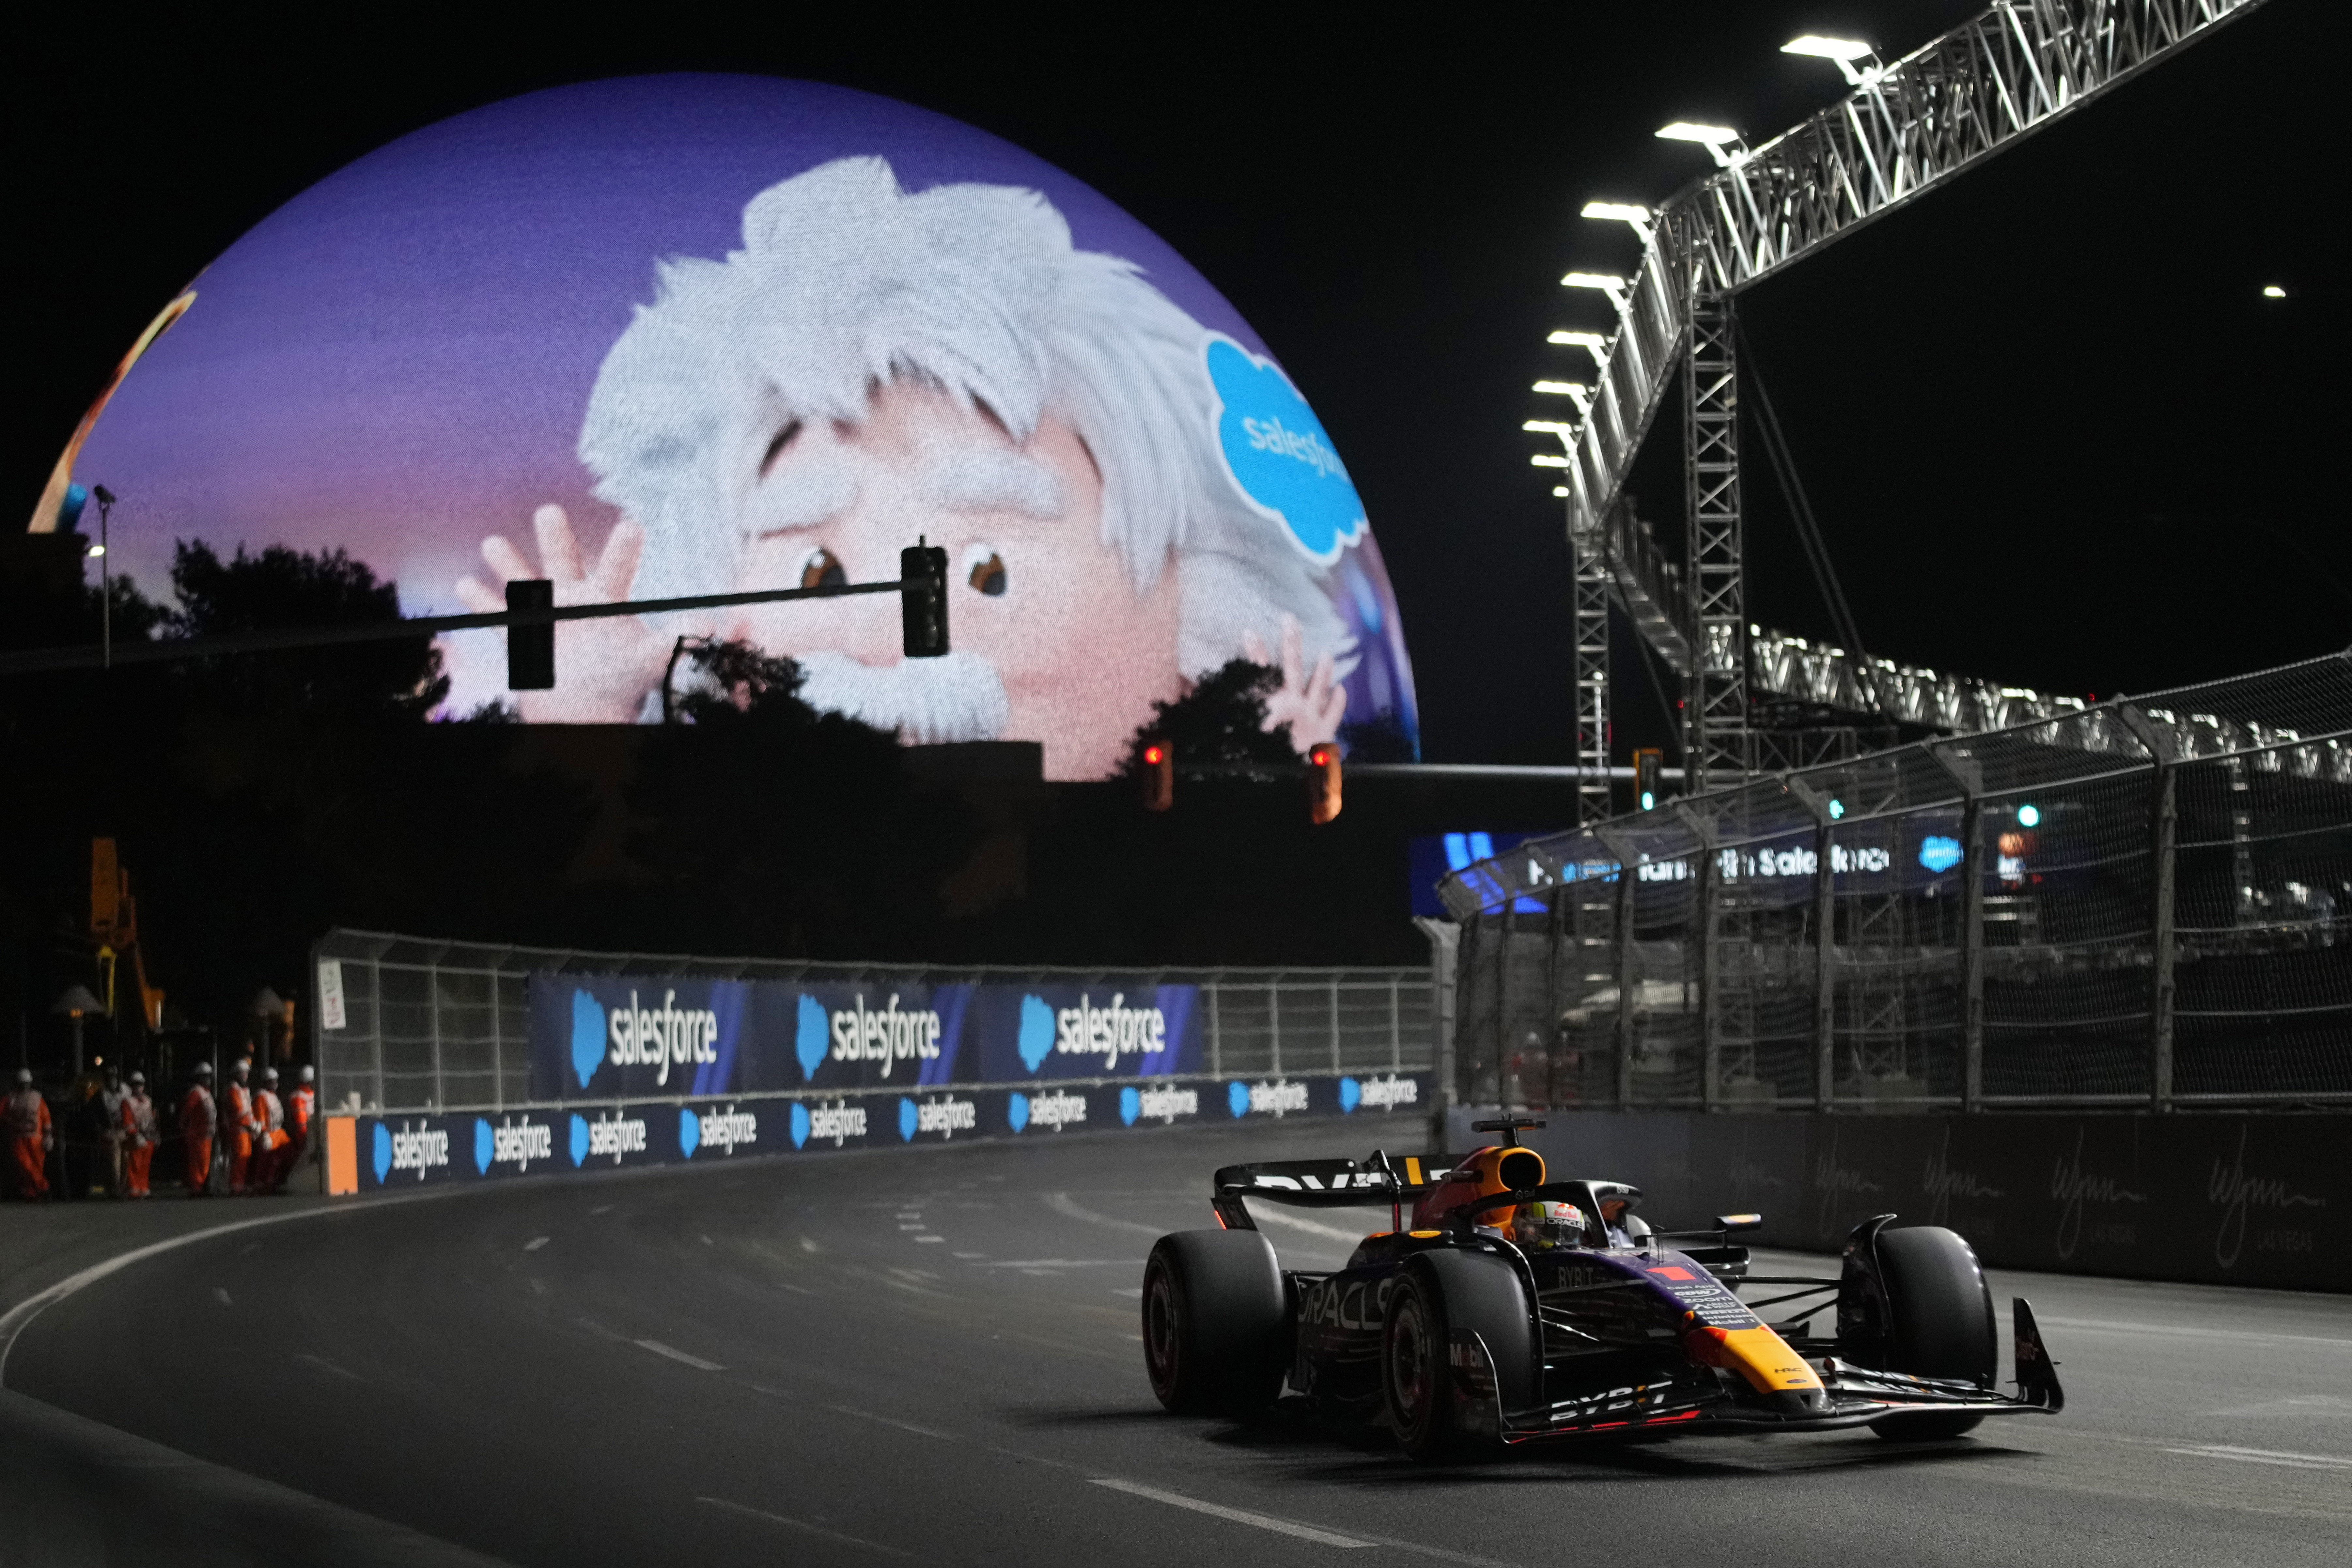 Red Bull driver Max Verstappen will start second